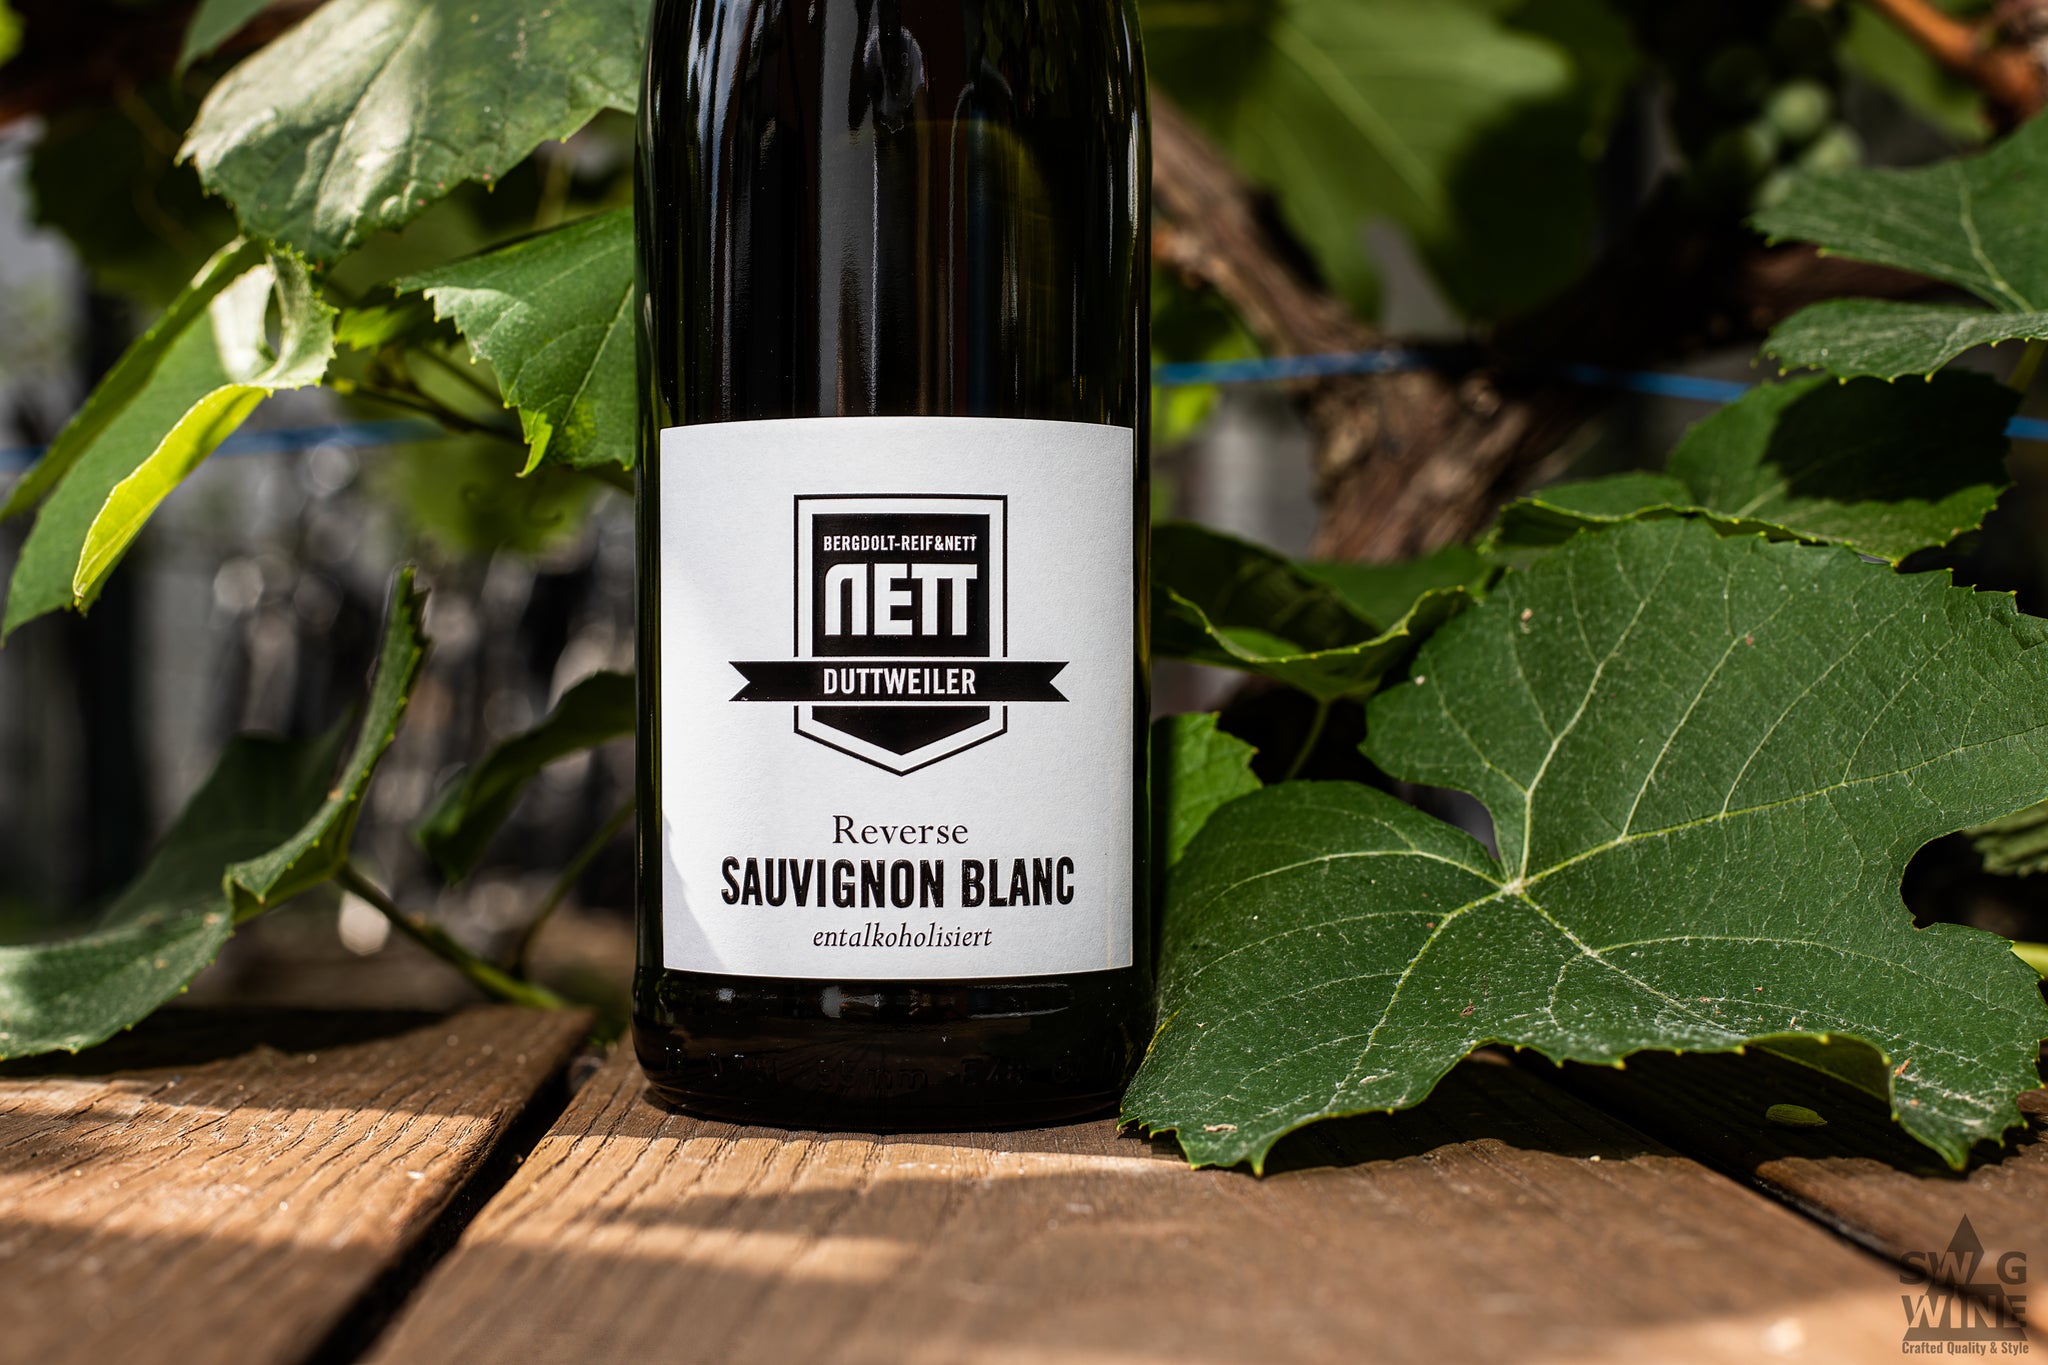 Reverse Sauvignon Blanc entalkoholisiert- Bergdolt-Reif & Nett